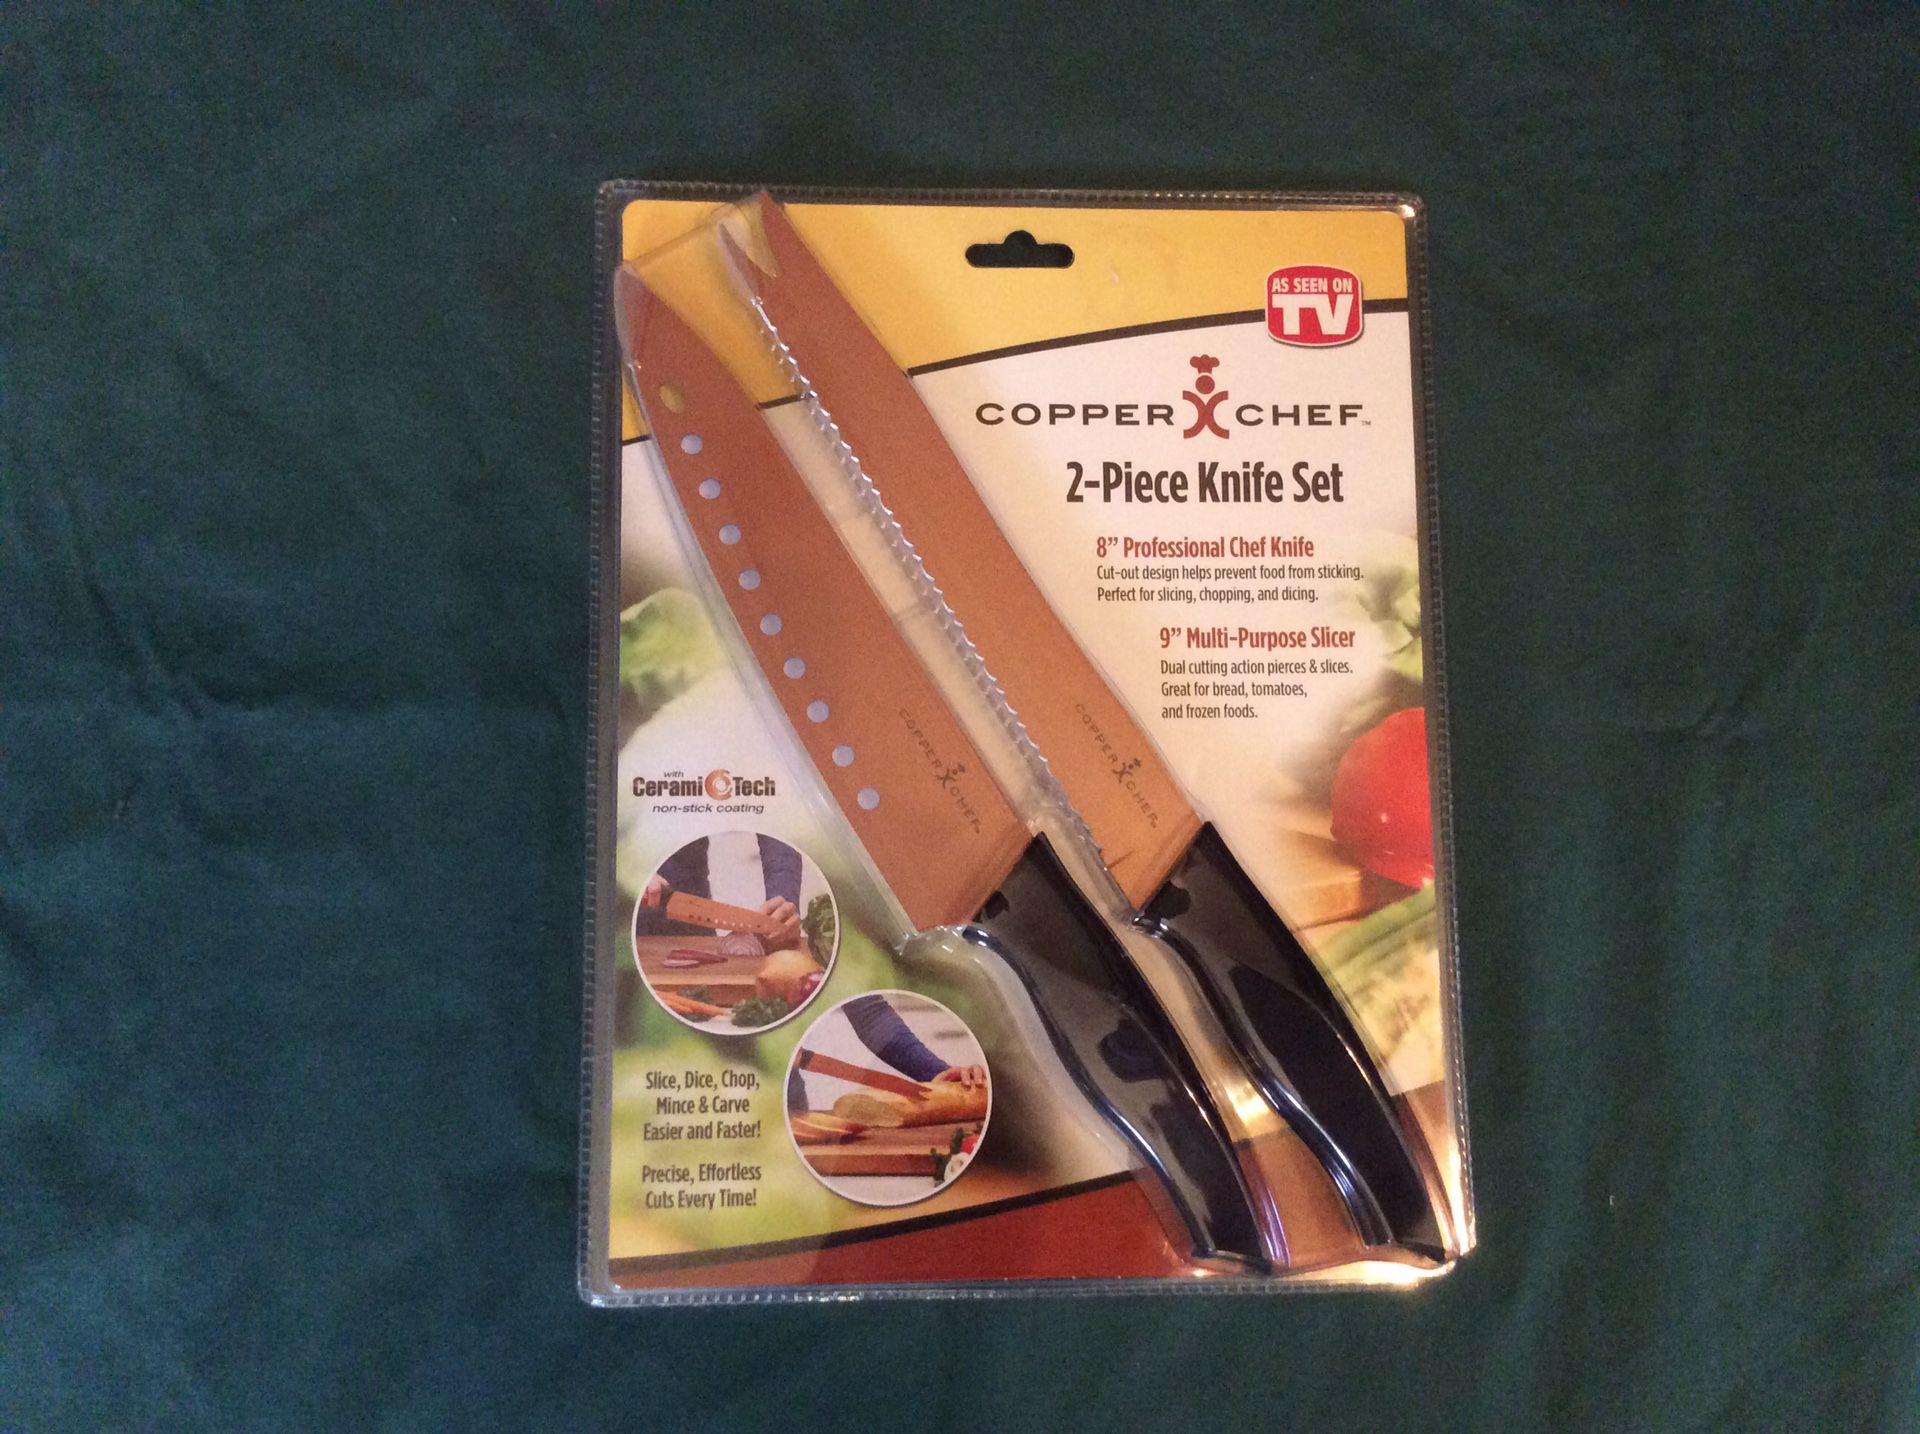 Copper Chef 2-piece knife set